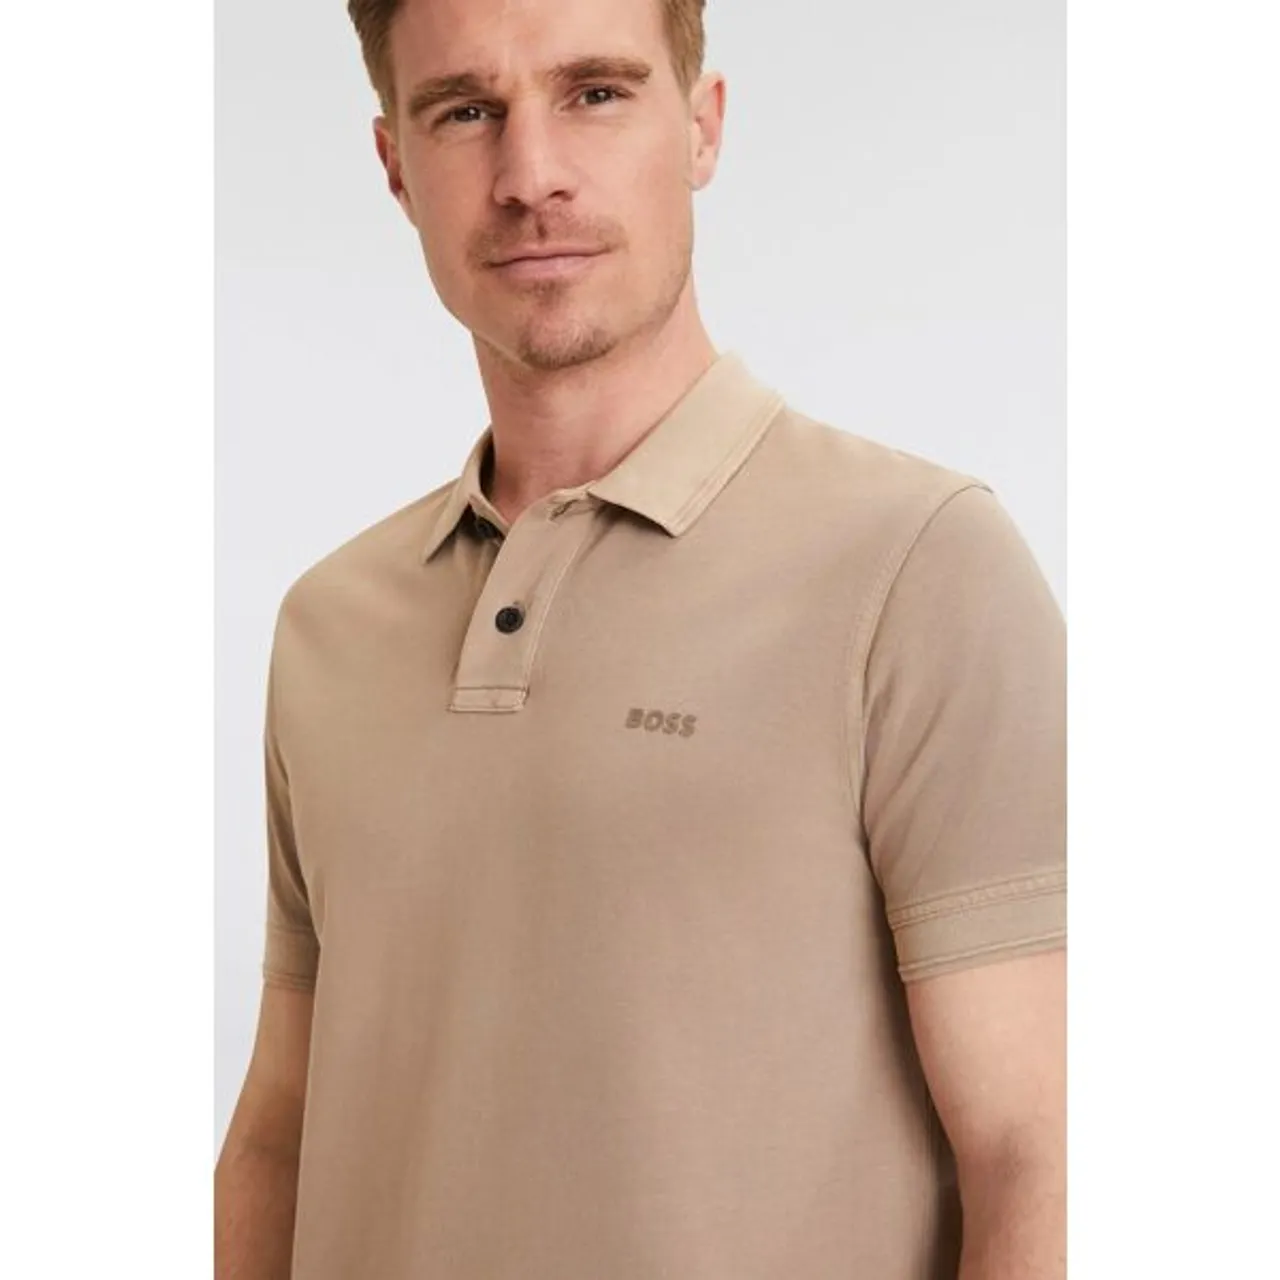 Poloshirt BOSS ORANGE "Prime" Gr. S, braun (246_open_brown) Herren Shirts Kurzarm mit Polokragen